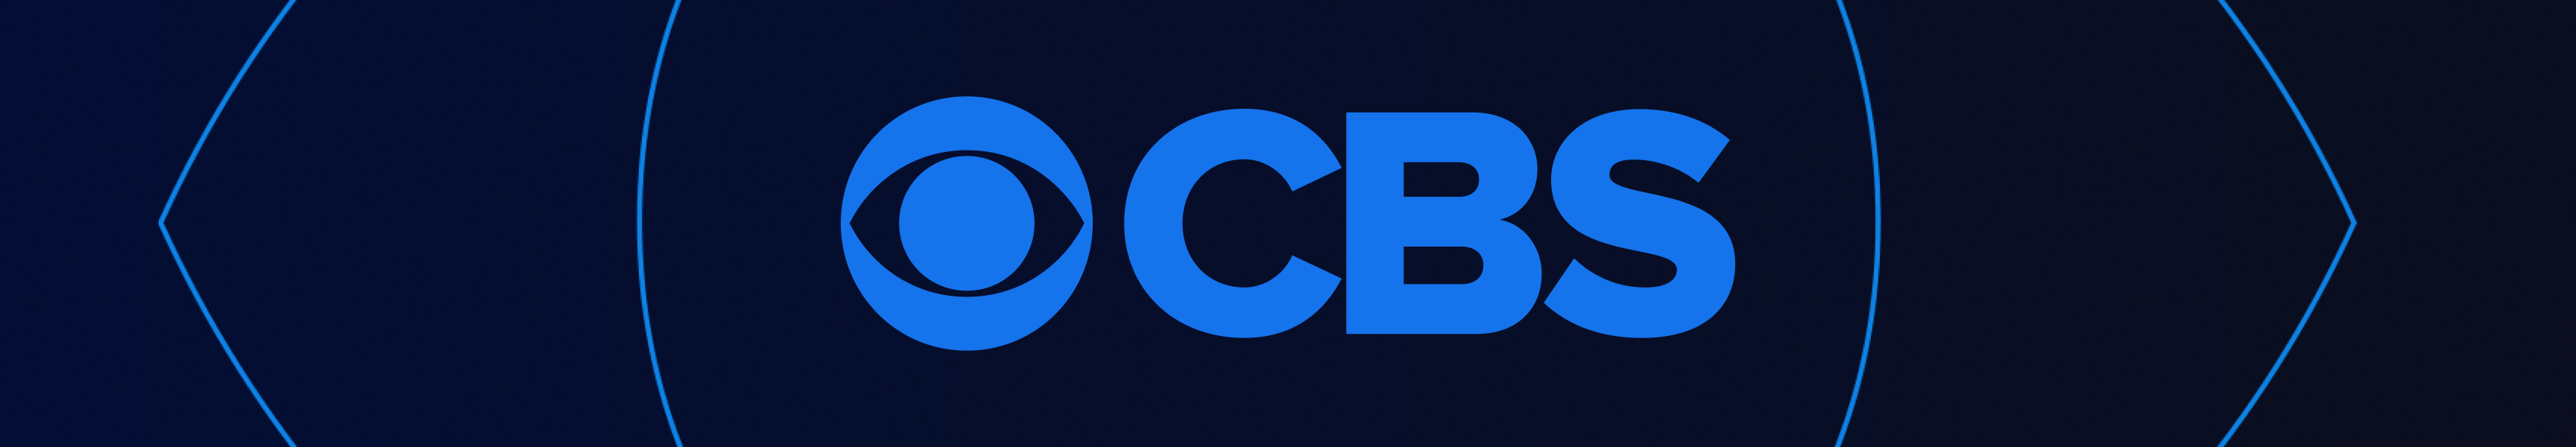 CBS Entertainment Home & Office